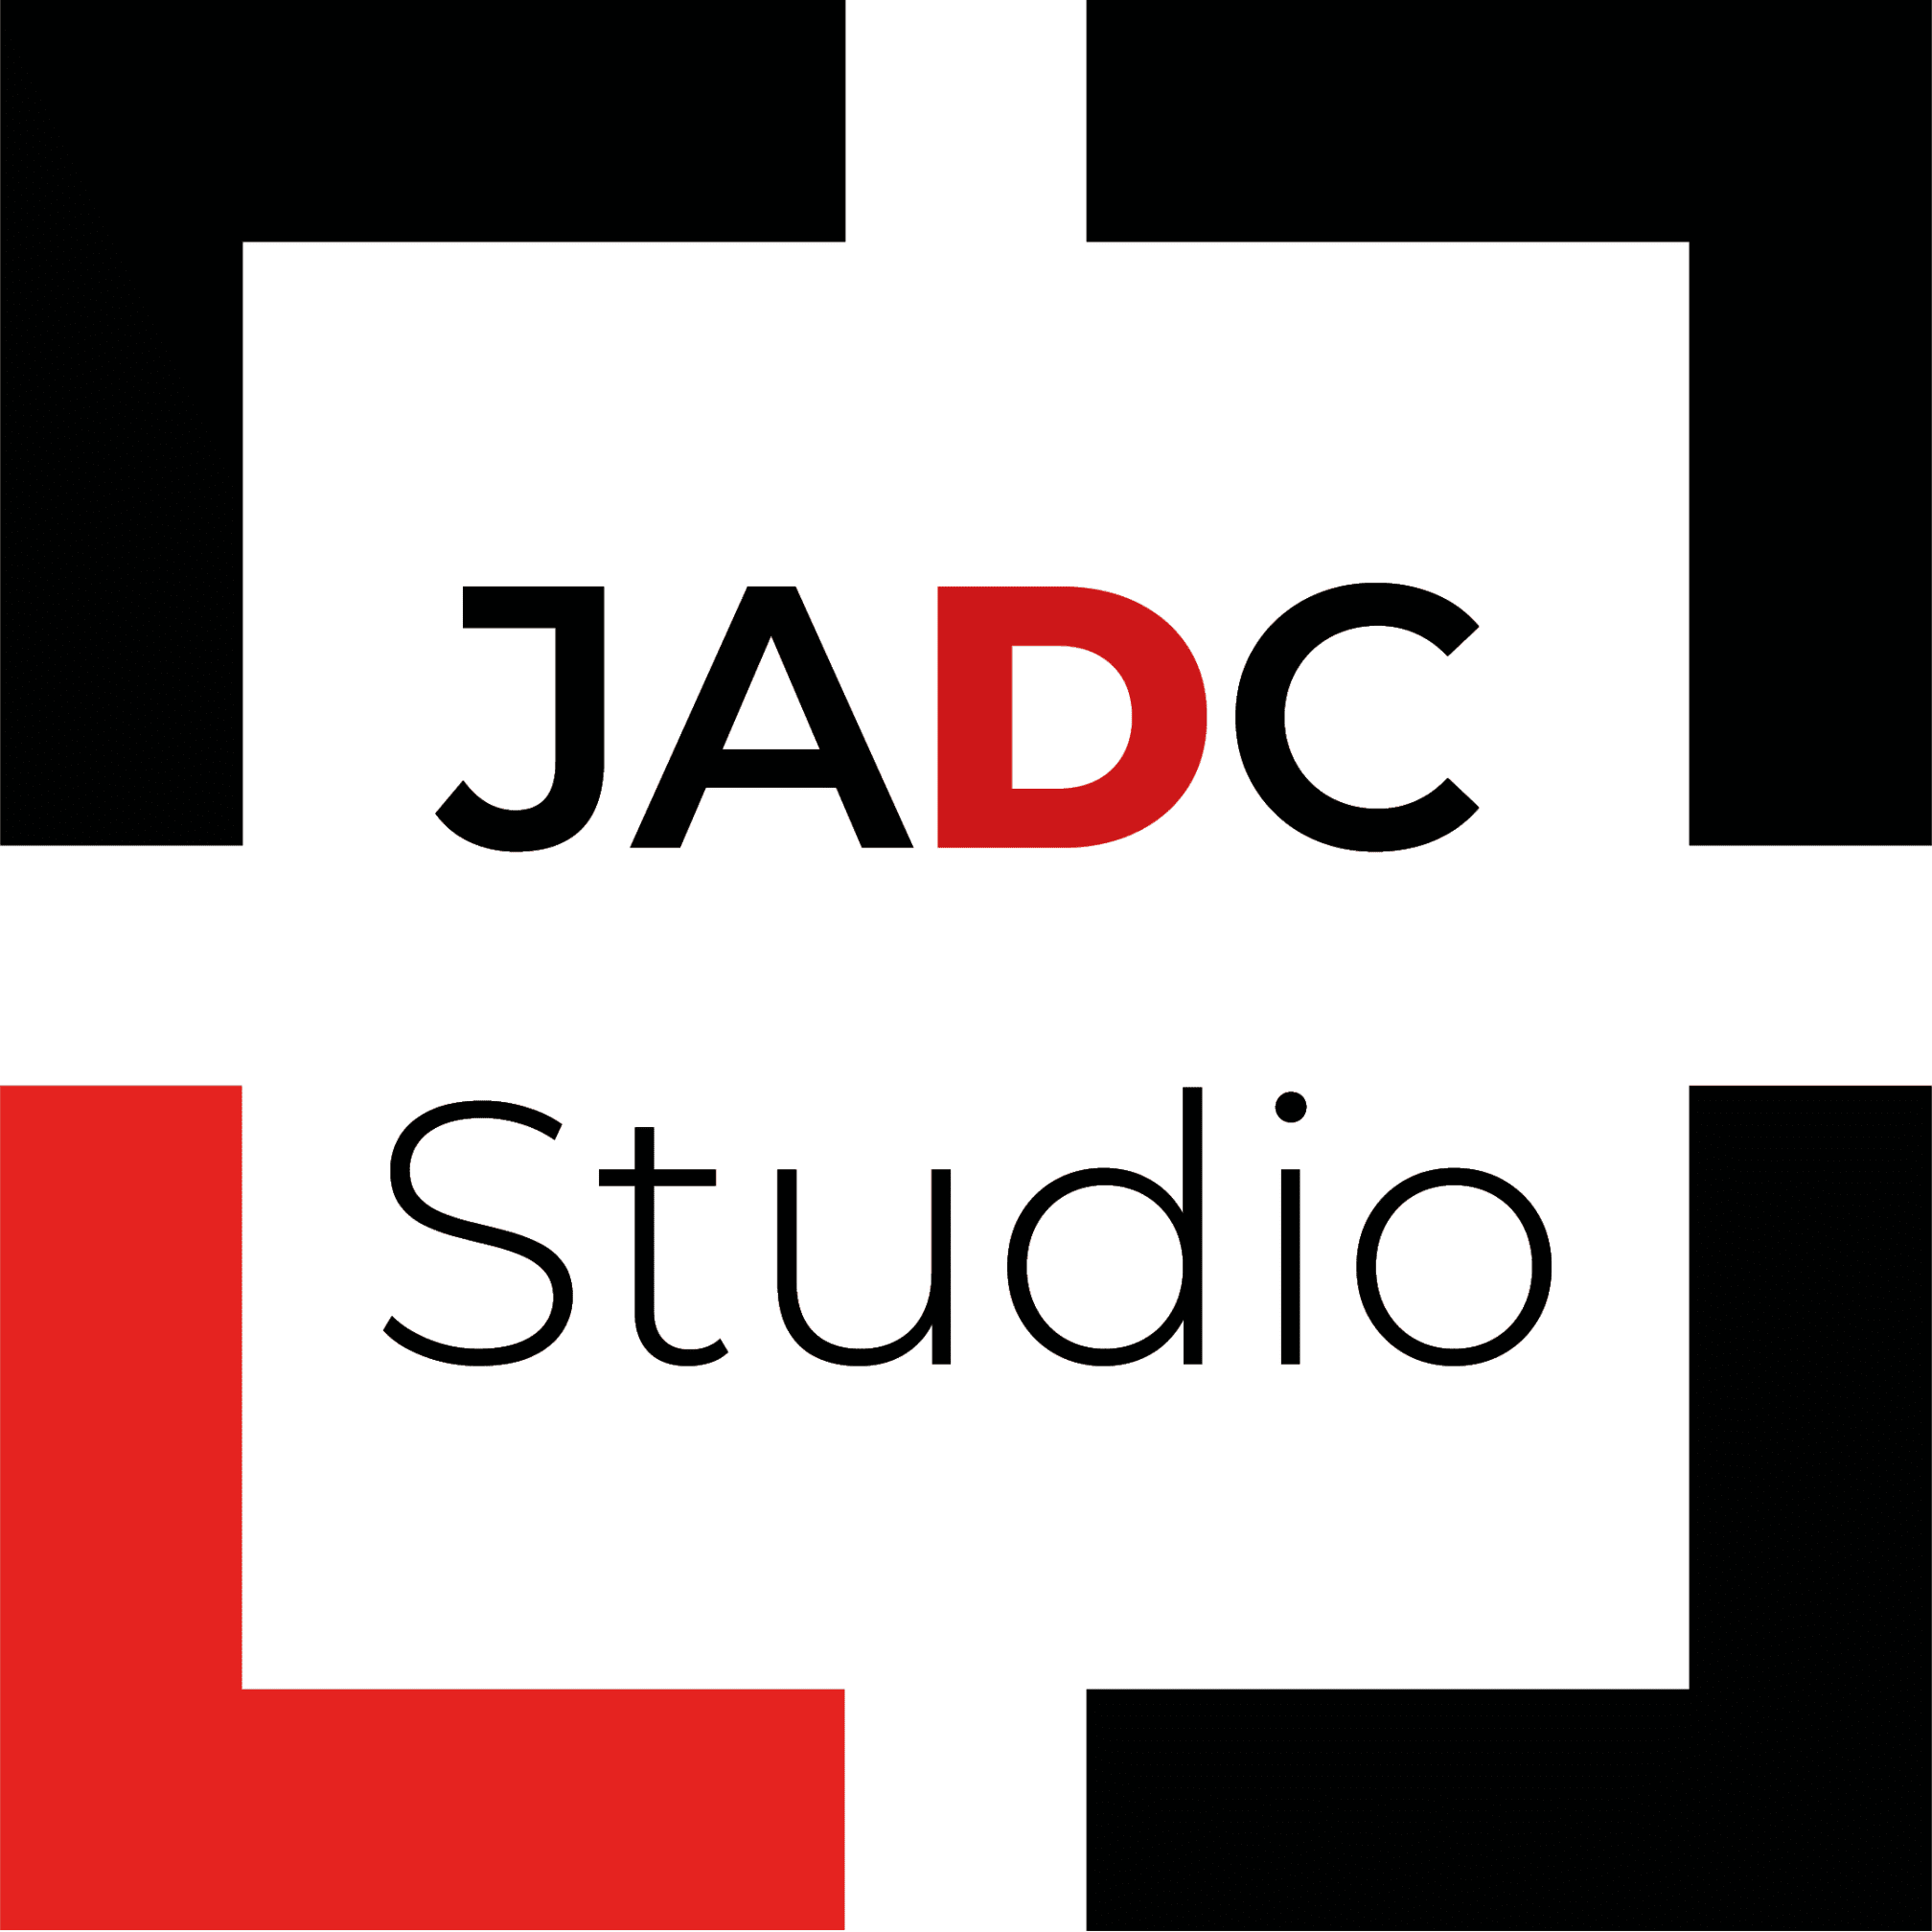 JADC Studio - Chelmsford, Essex CM2 6QR - 07564 542835 | ShowMeLocal.com